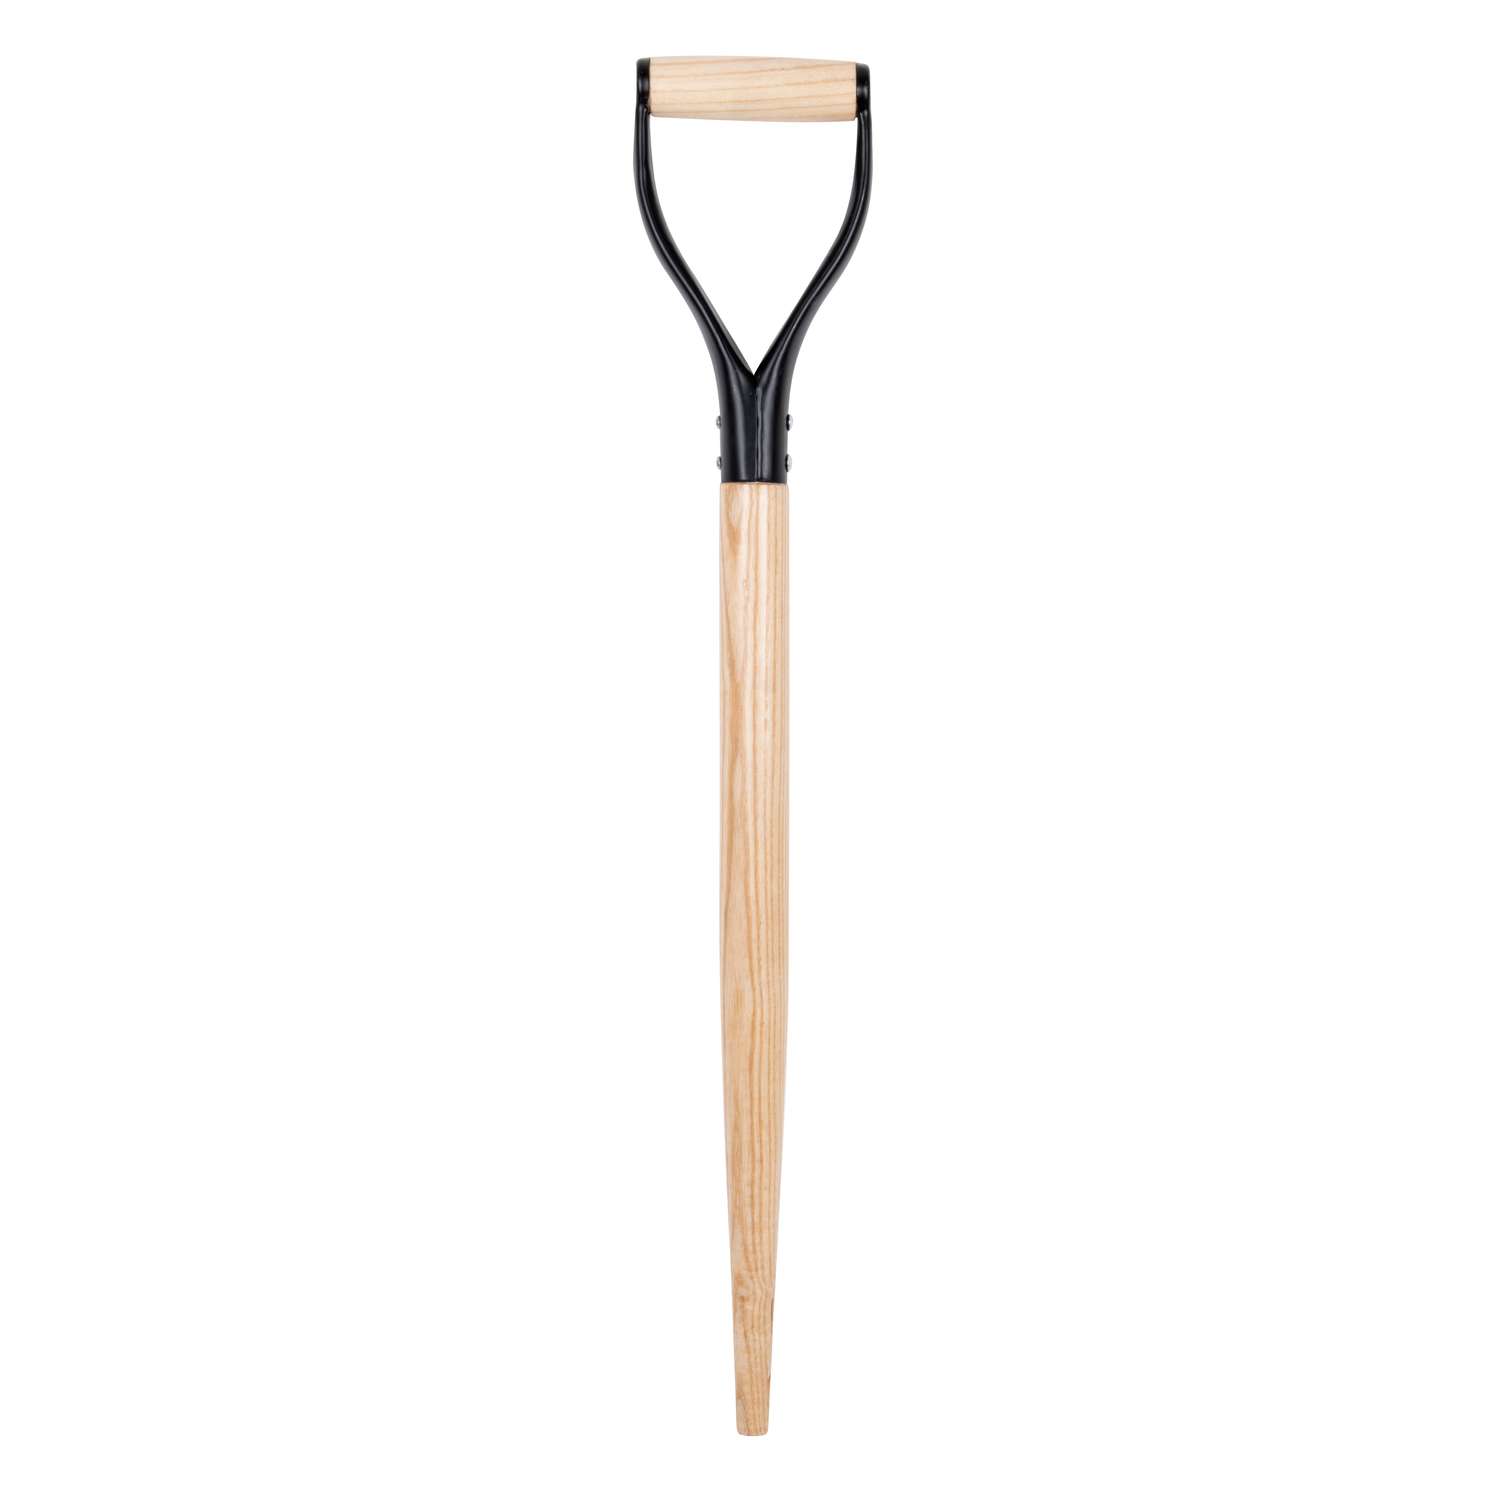 Truper 15901 Replacement Wood D-Grip Handle for Shovel 